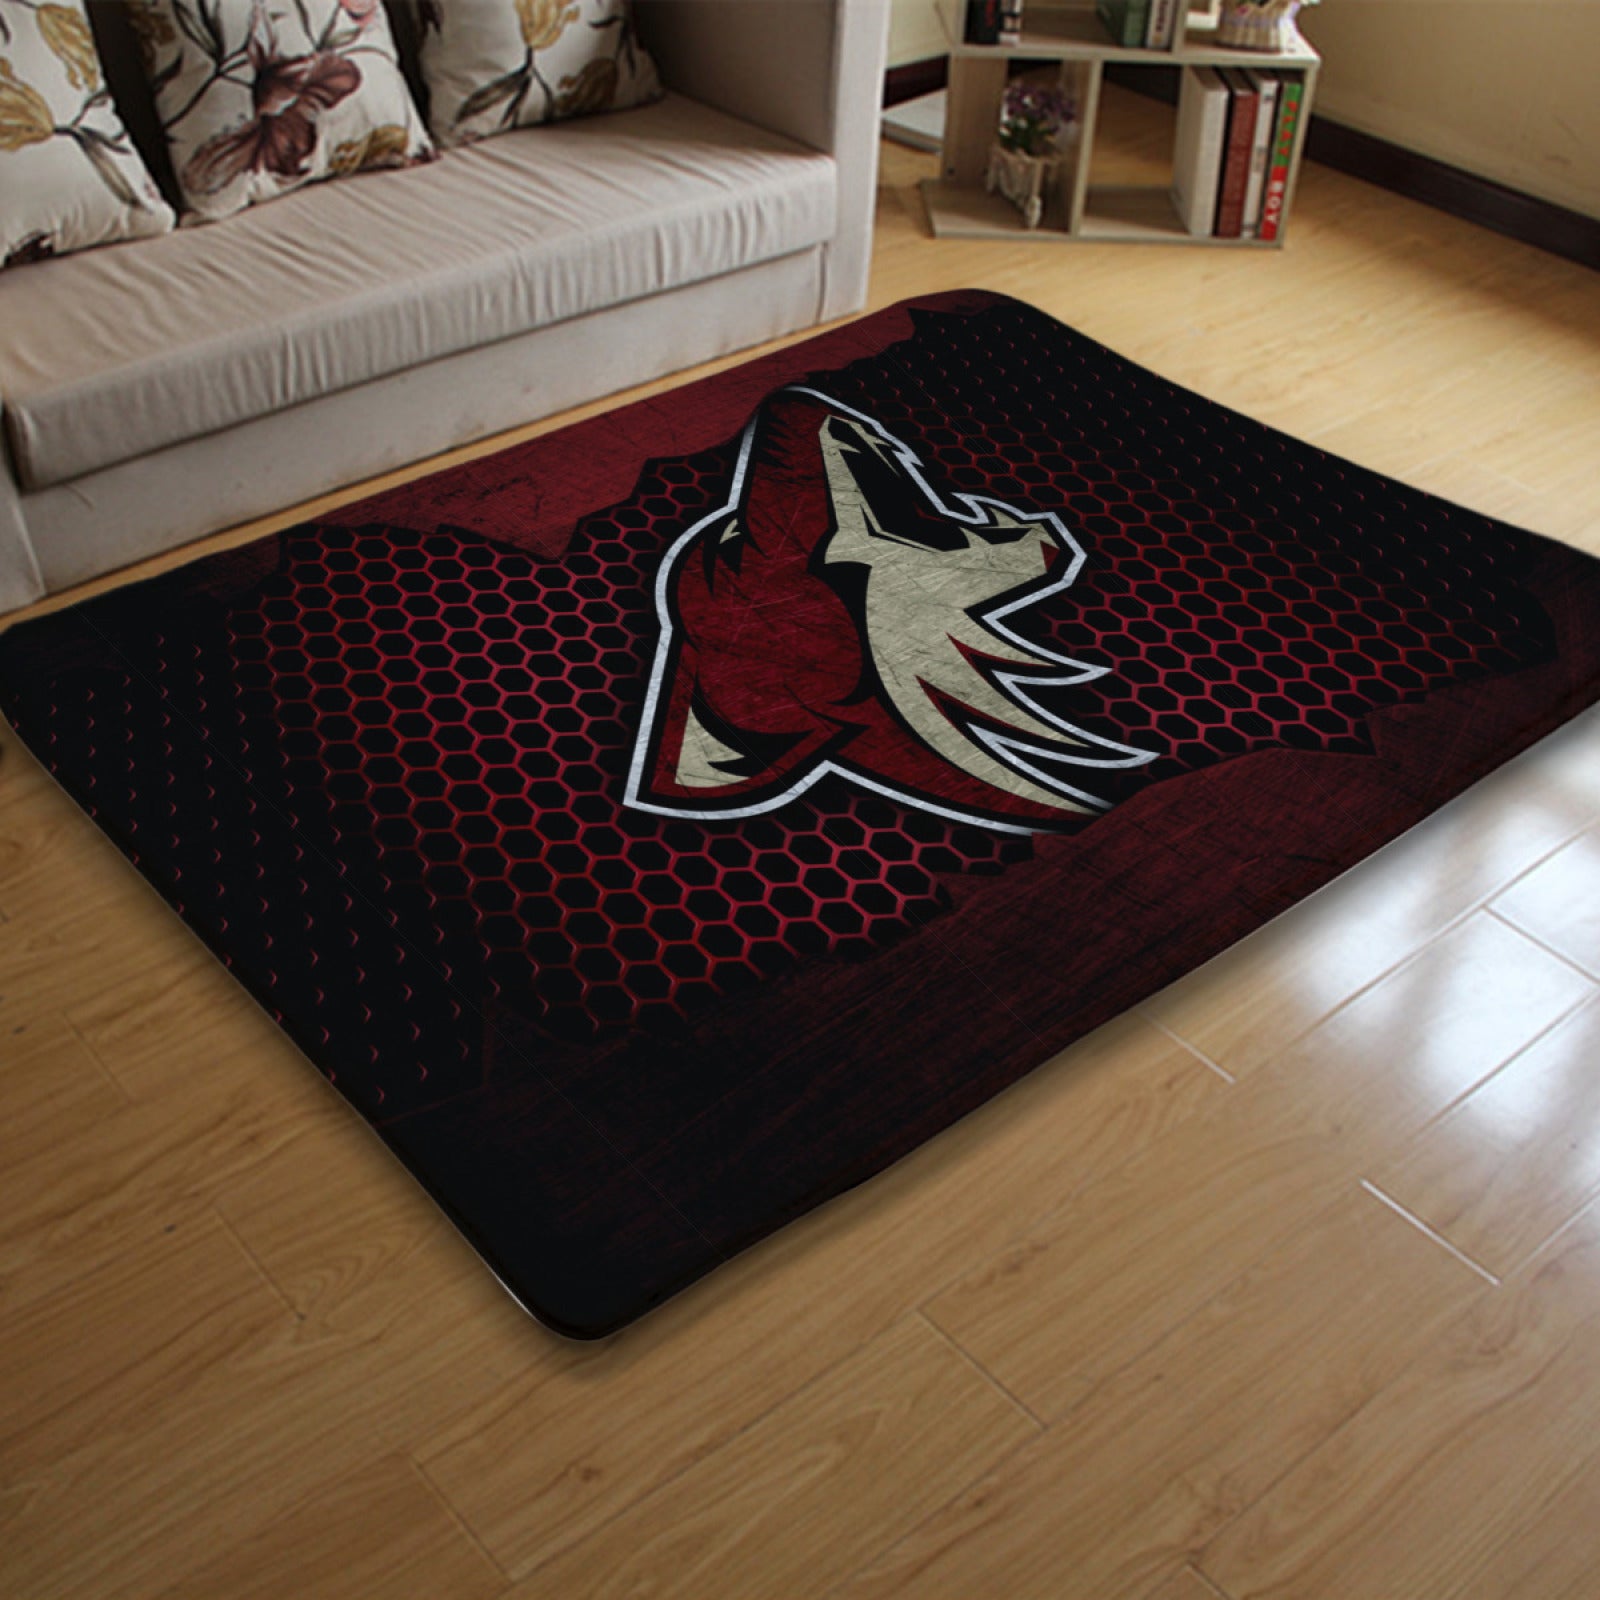 Phoenix Coyotes Hockey Rugs Bedroom Living Room Bathroom Carpet Mat Rug